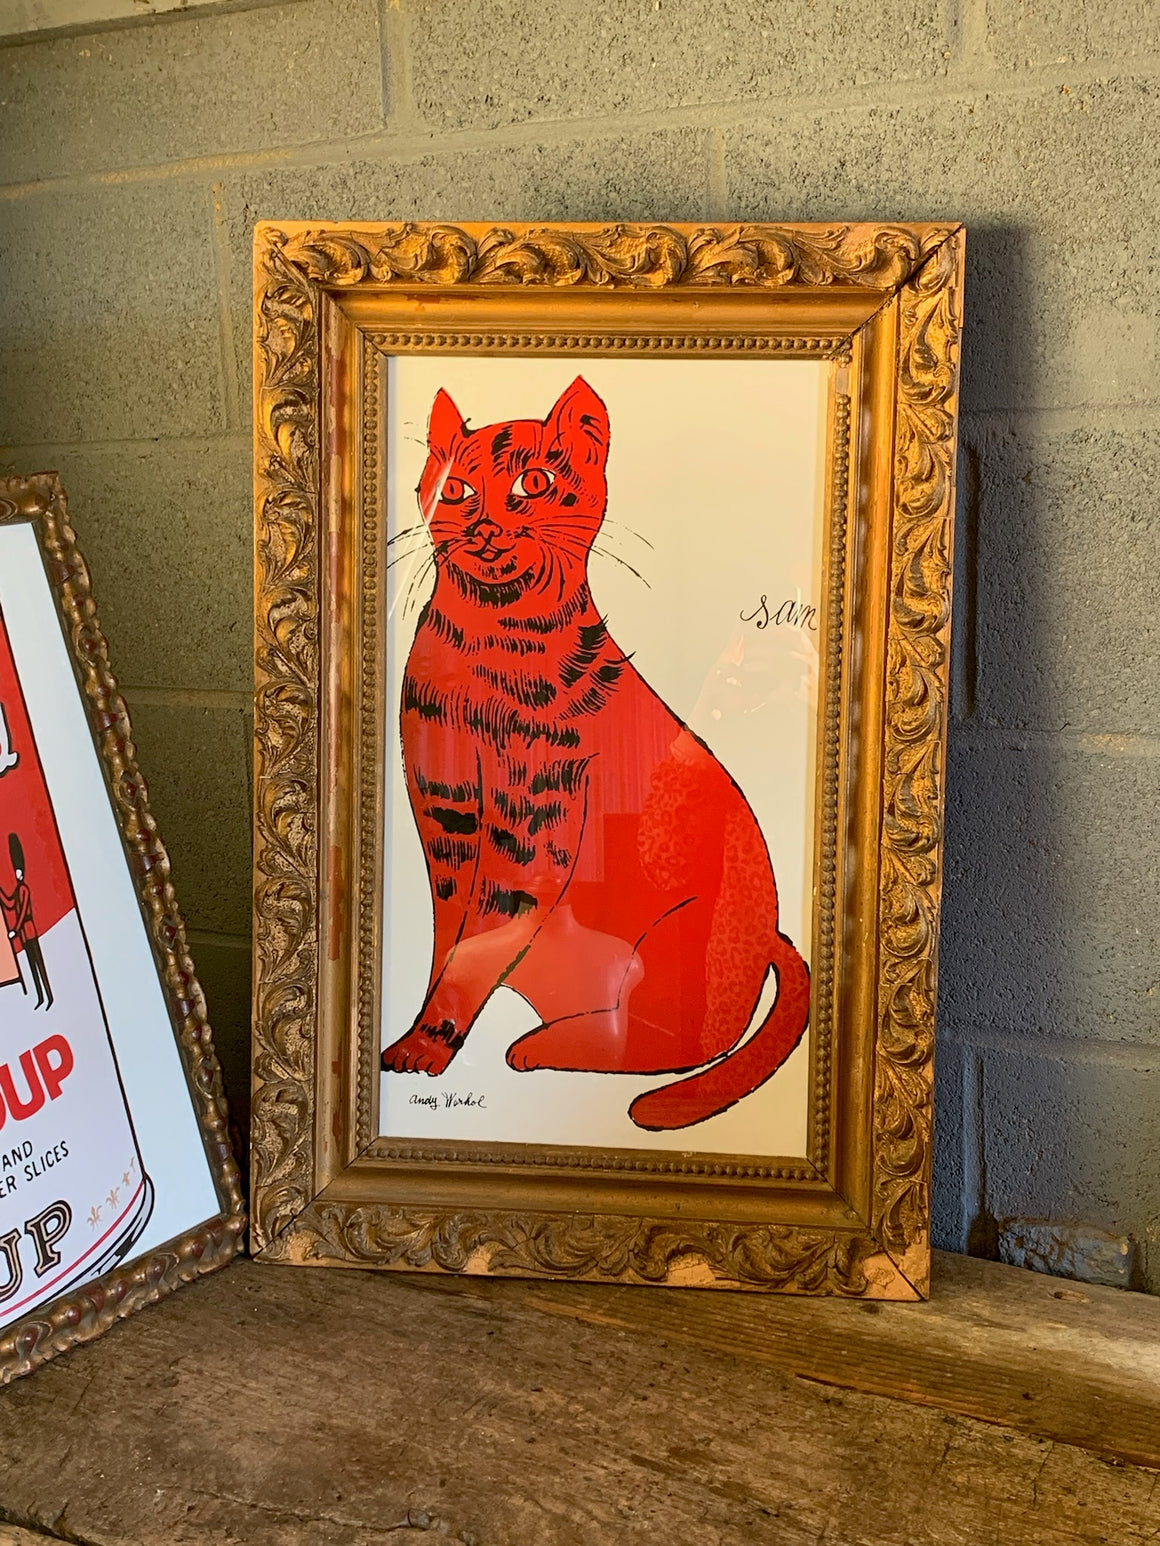 A framed and glazed Warhol print - "Sam" - in an antique frame